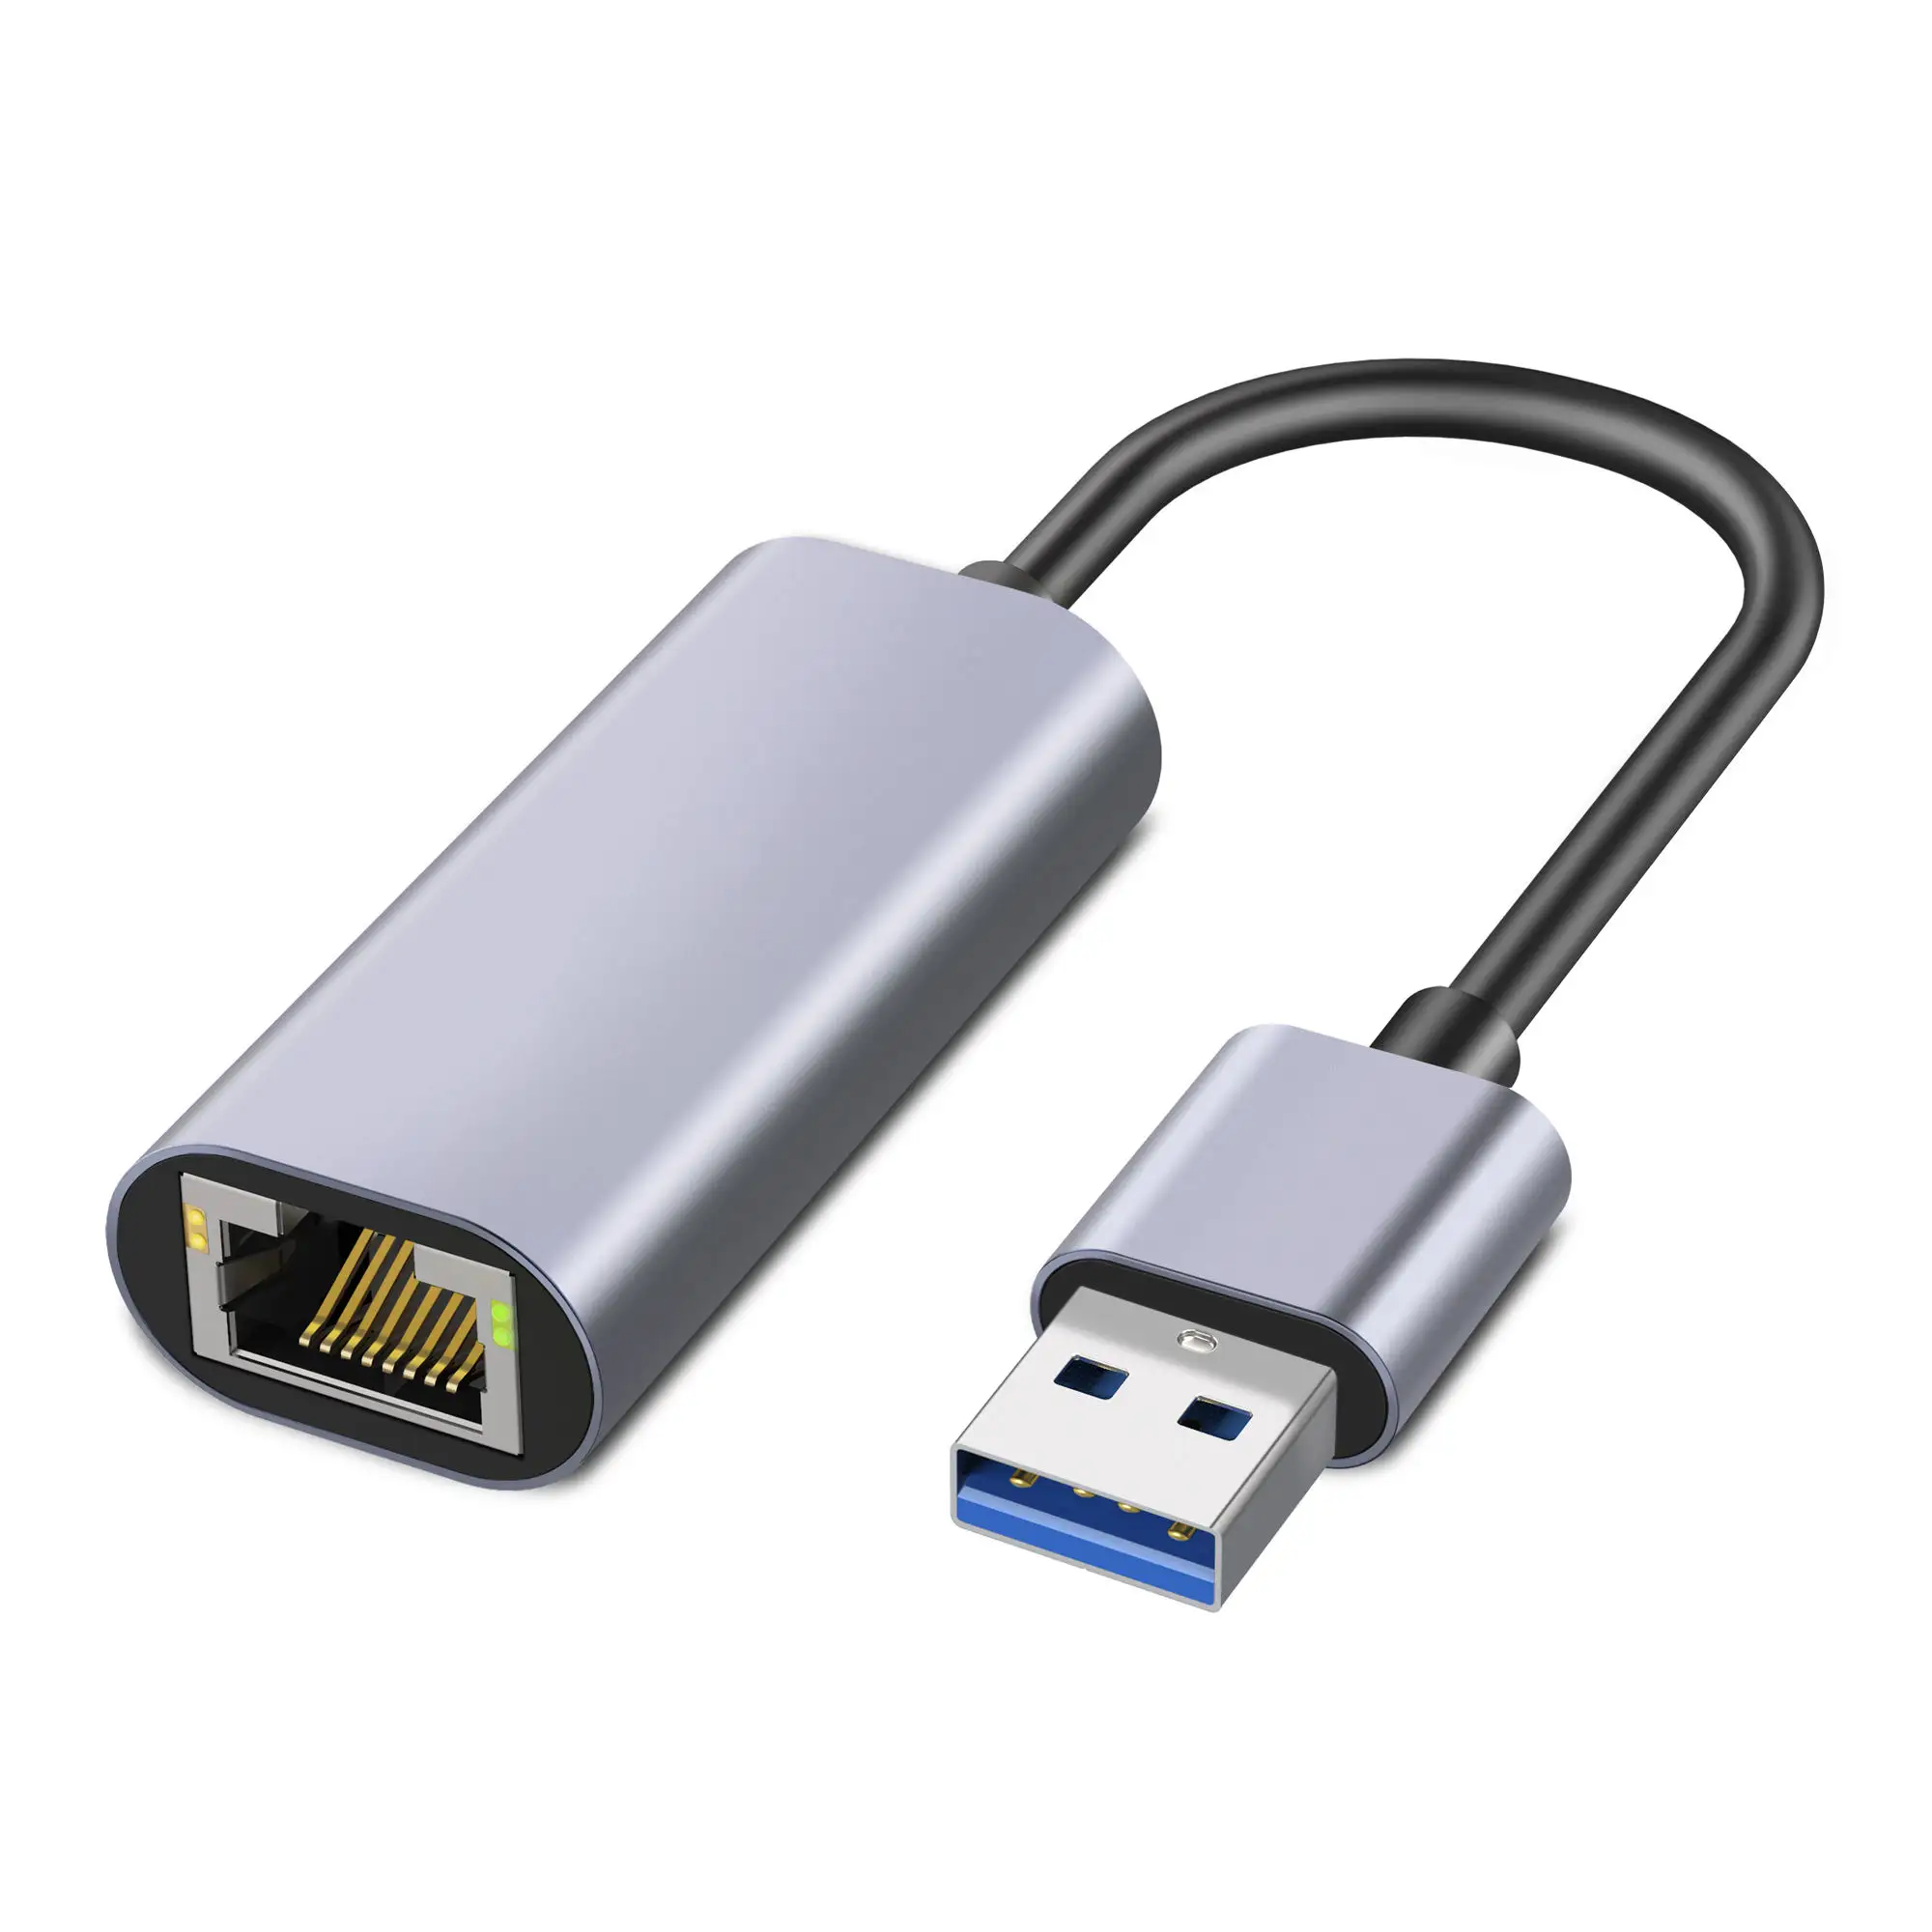 New Product Gigabit Ethernet Adapter USB Type C 3.0 Network Card to RJ45 Lan Aluminum10/100/1000 Mbps External for Laptop Phone